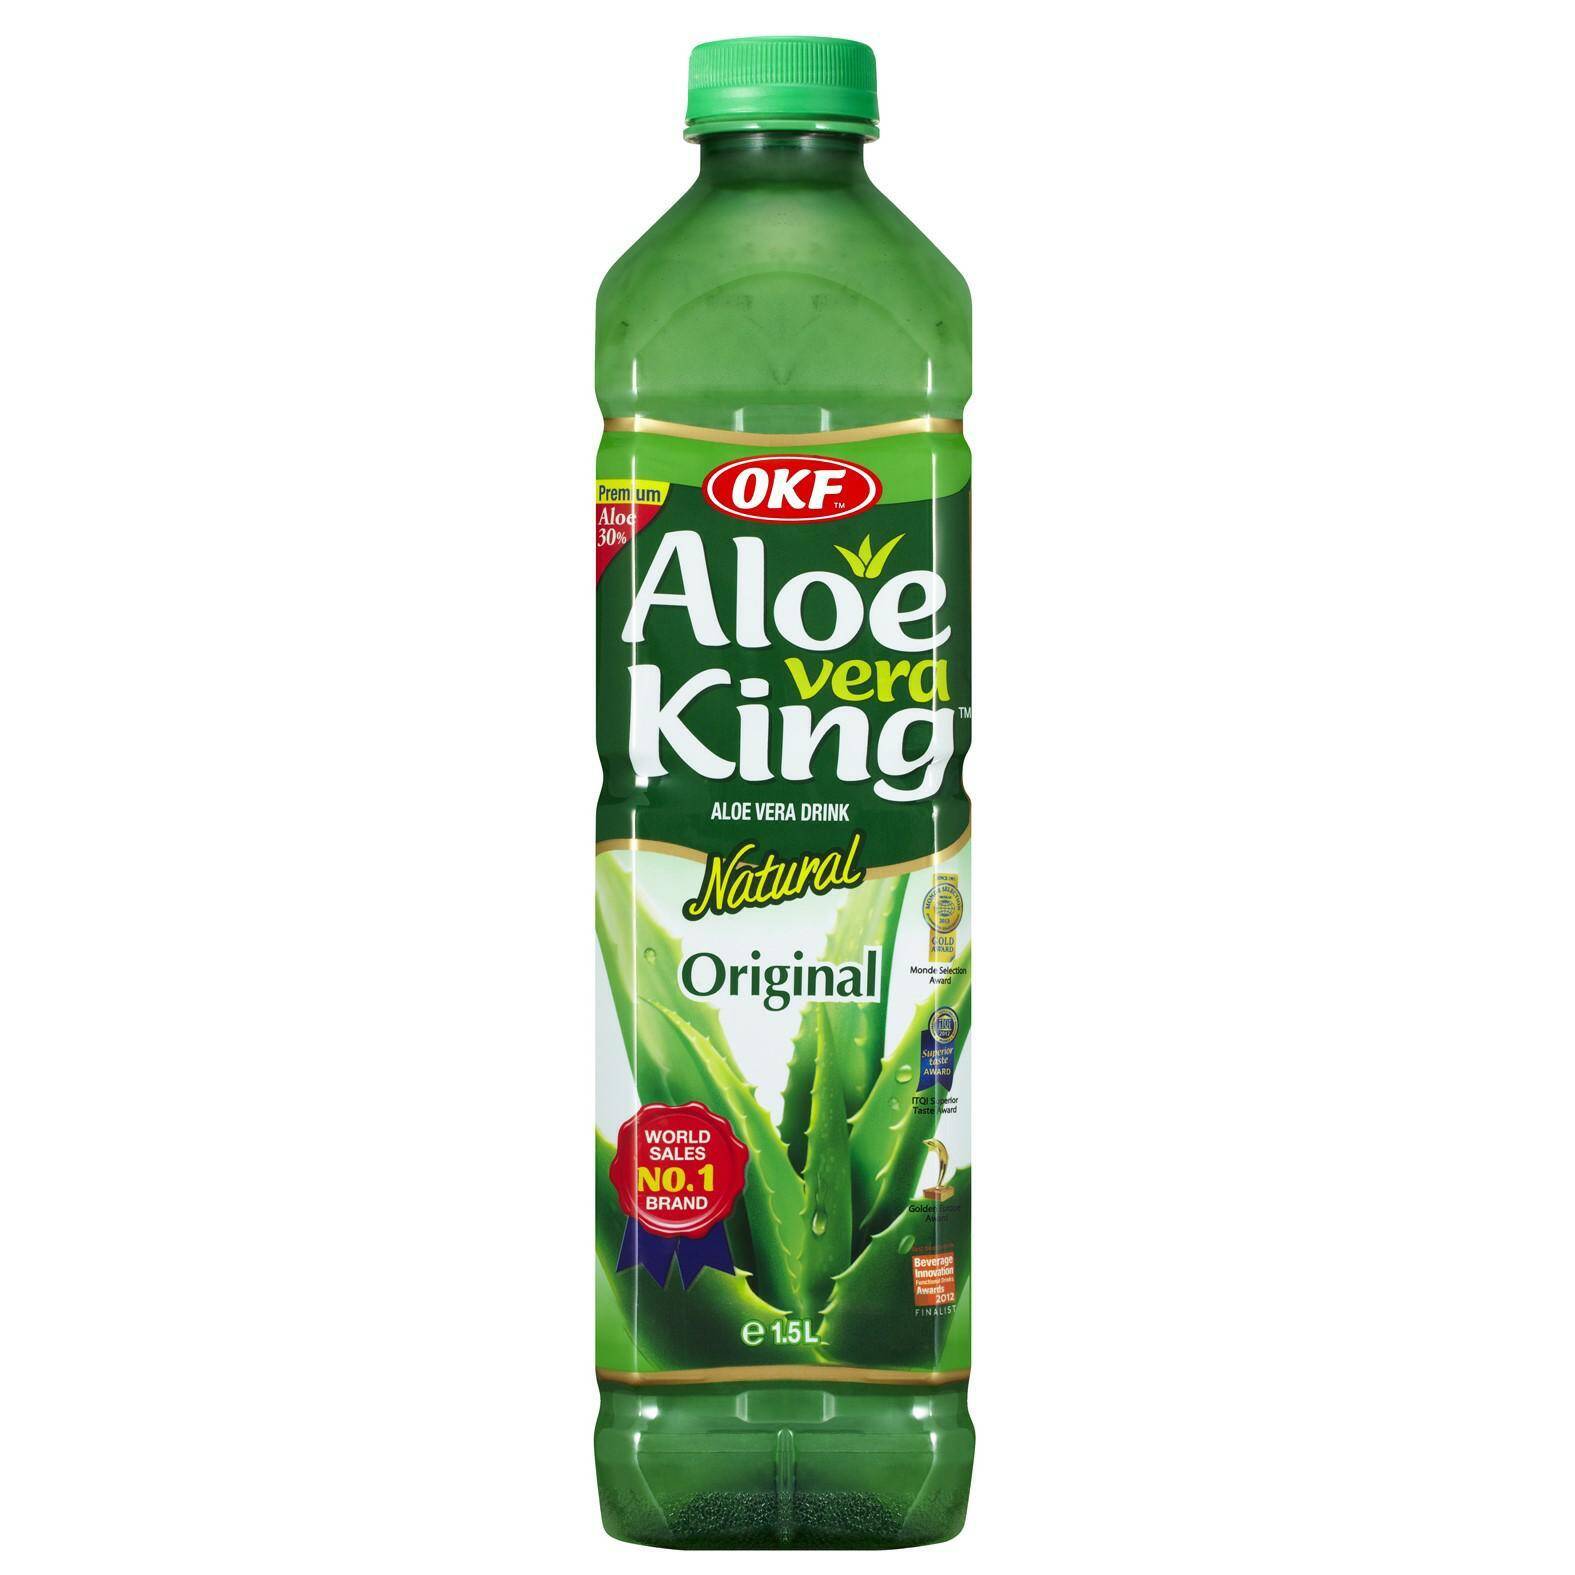 ALOE VERA KING napój aloesowy 1,5L [12]